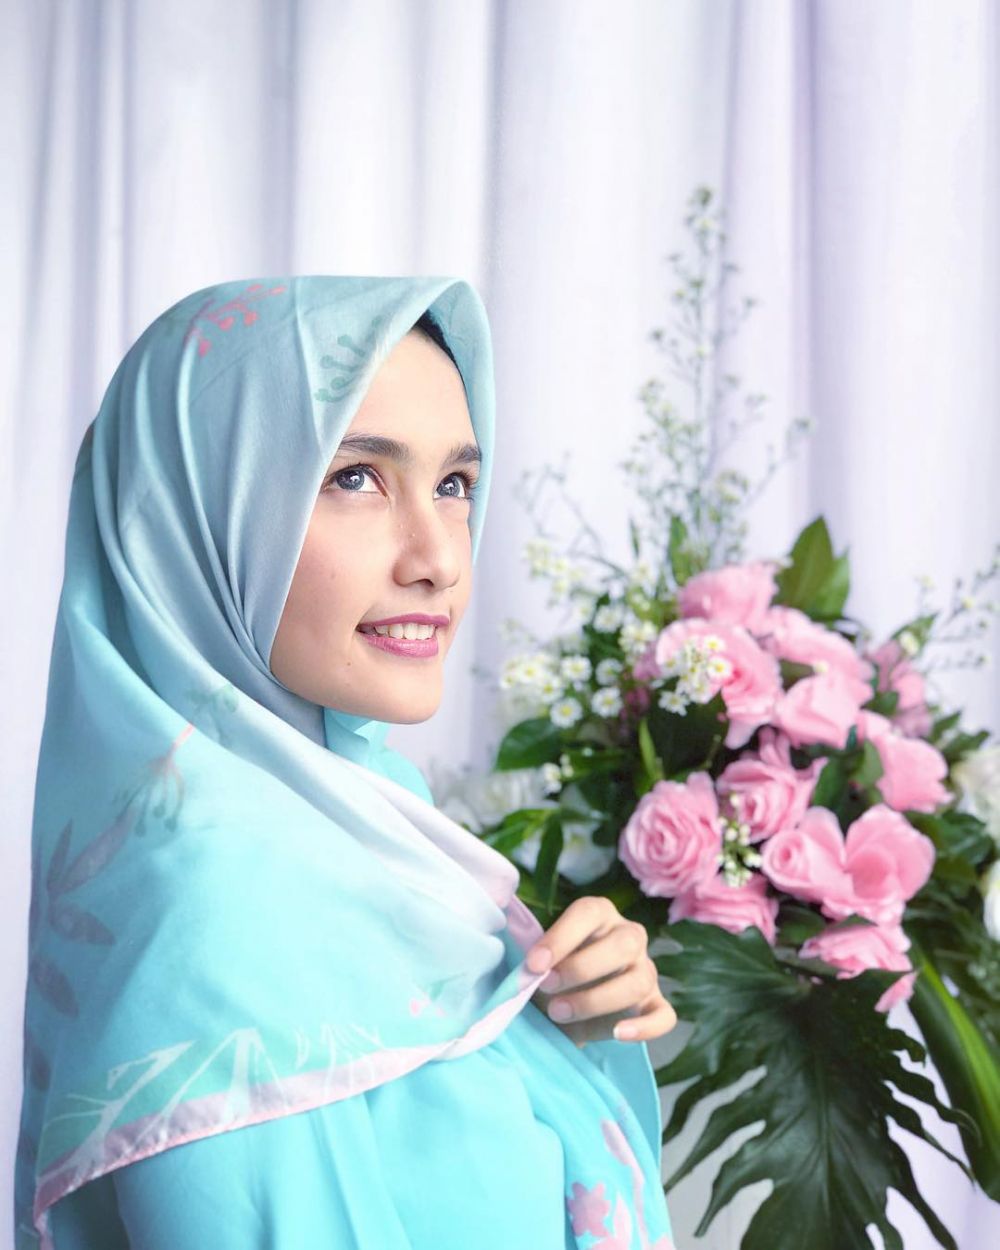 Pesona 3 gadis berhijab wakil Indonesia di Putri Muslimah Asia 2018